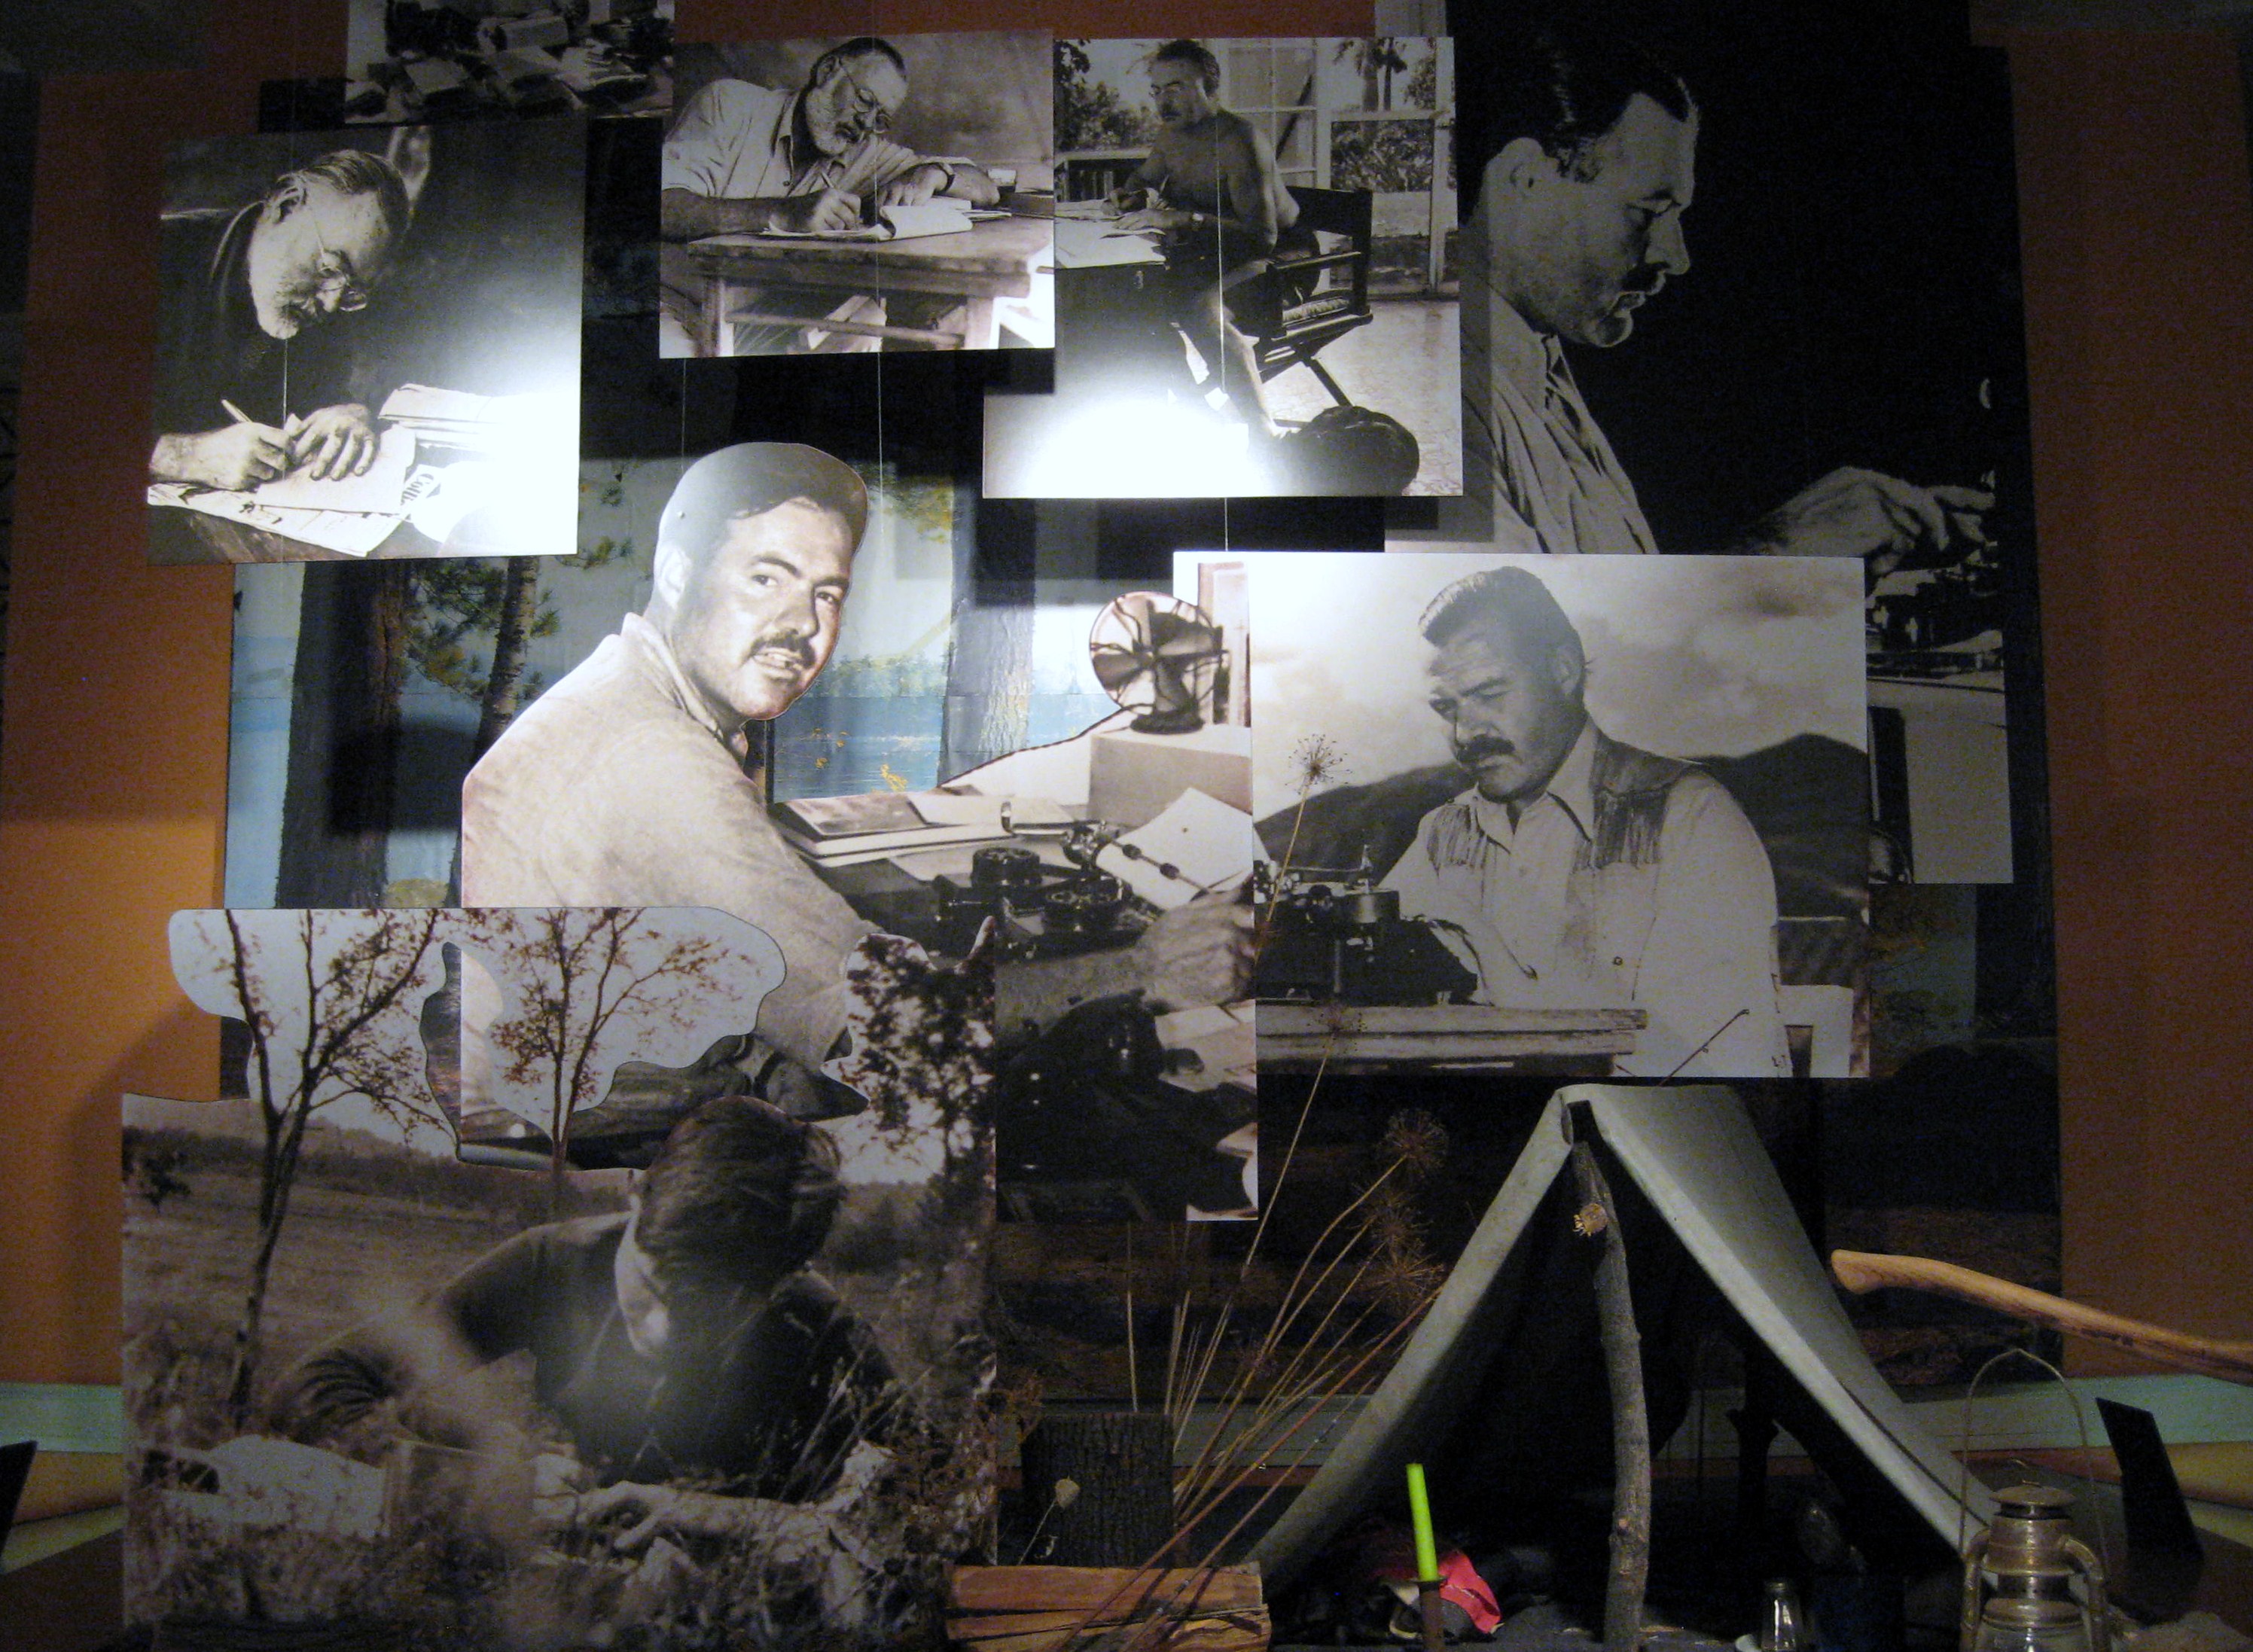 "Display at Ernest Hemingway Museum in Oak Park, Illinois"